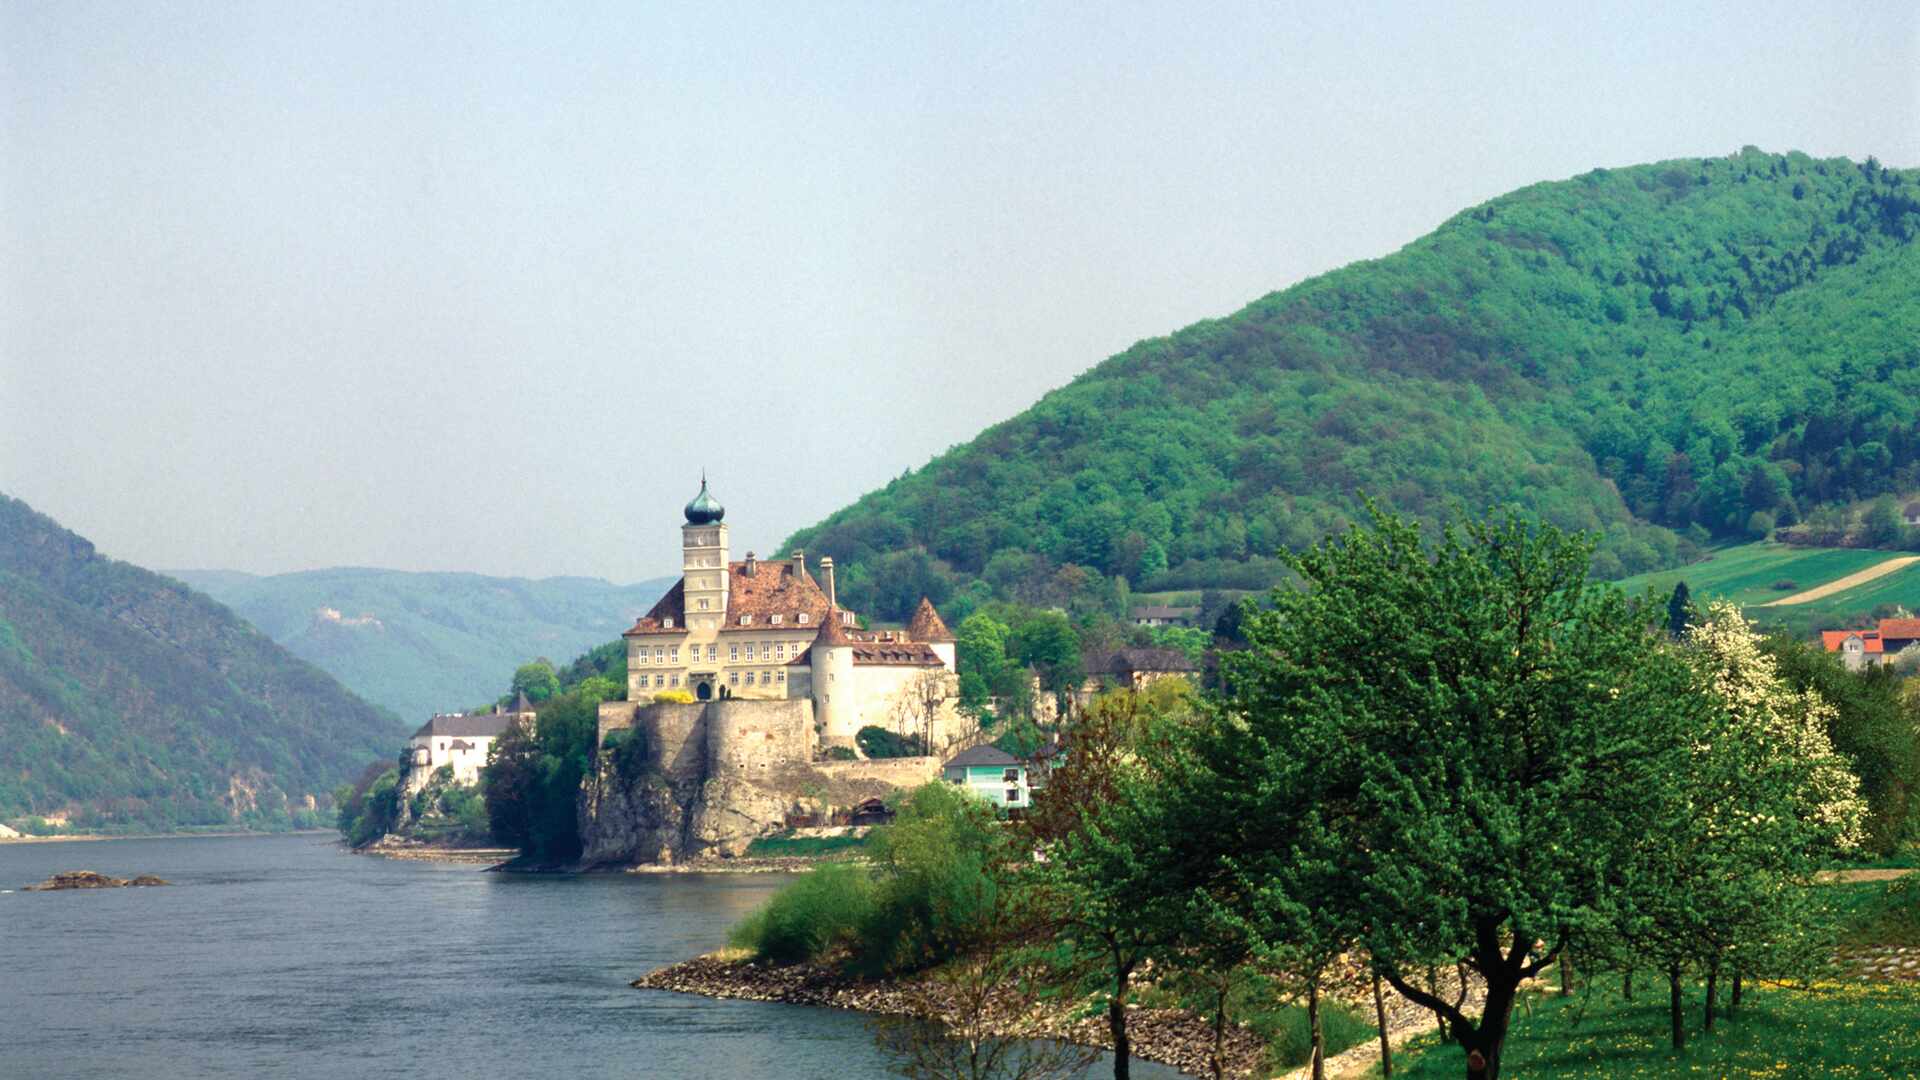 Large castle set high above the banks of a river, Austria